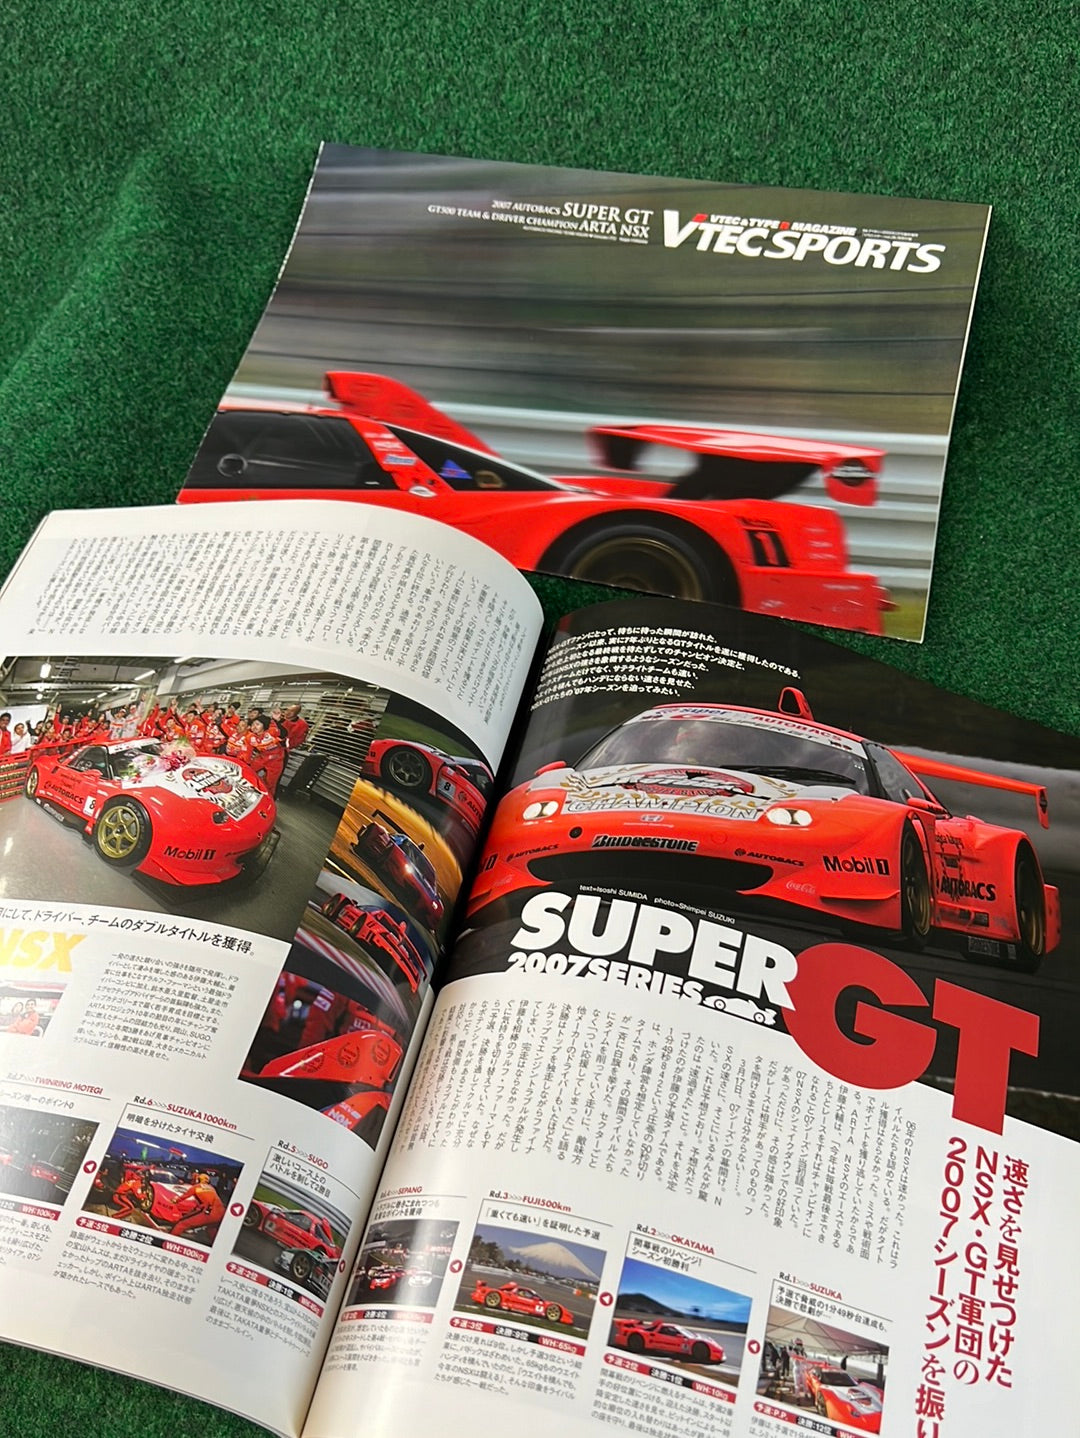 VTEC SPORTS Magazine - Vol. 028